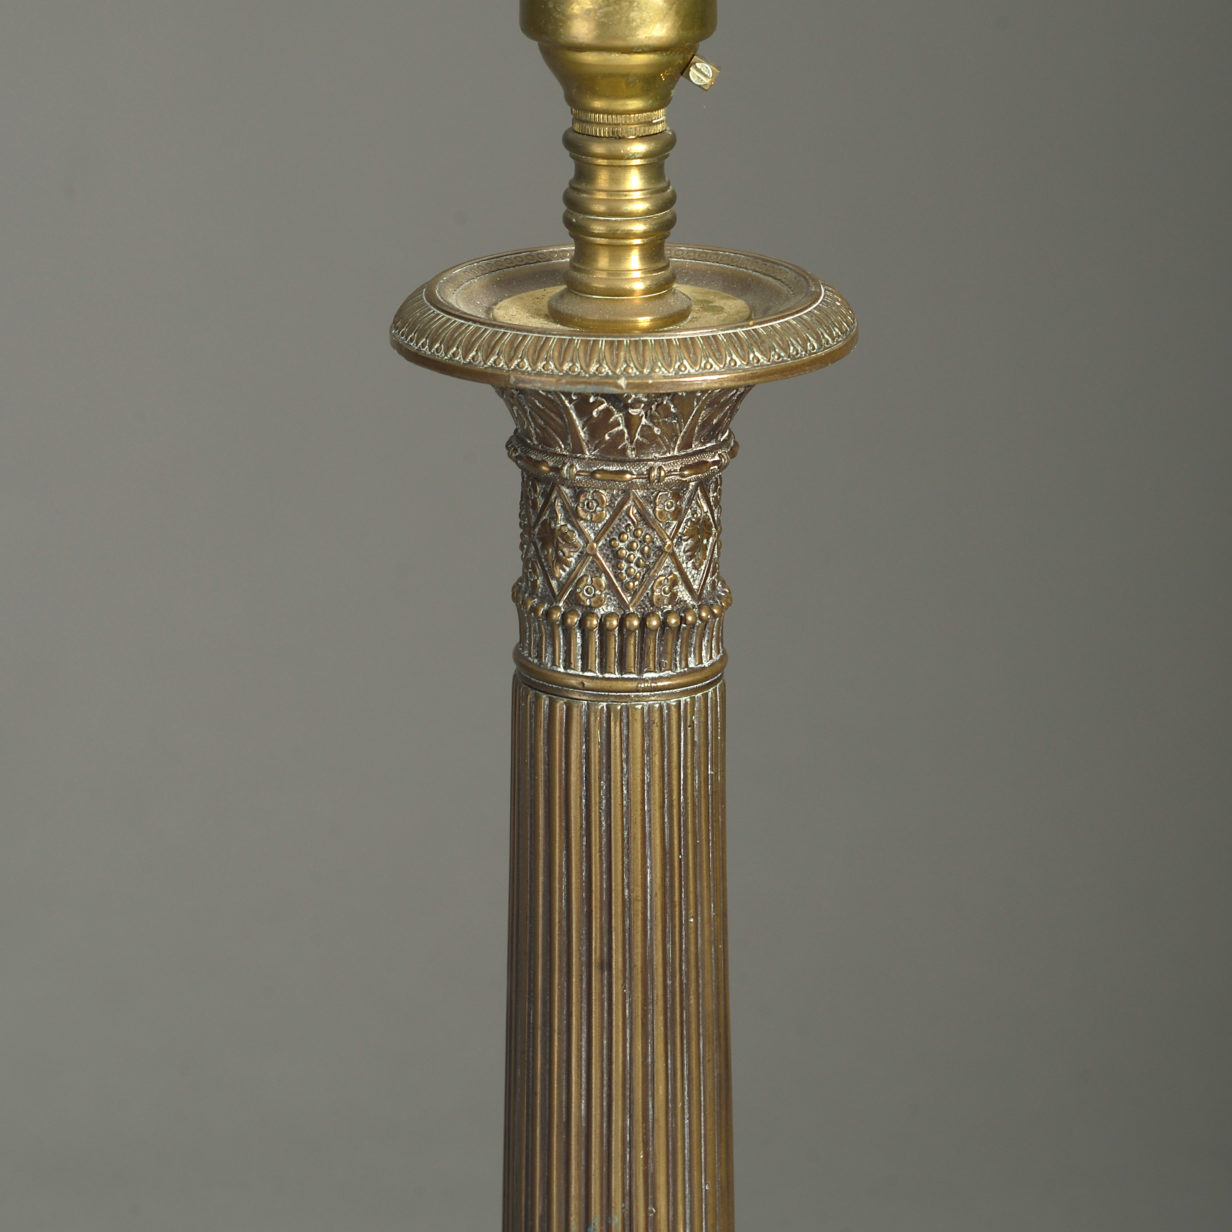 Late 19th century empire style bronze lamp base